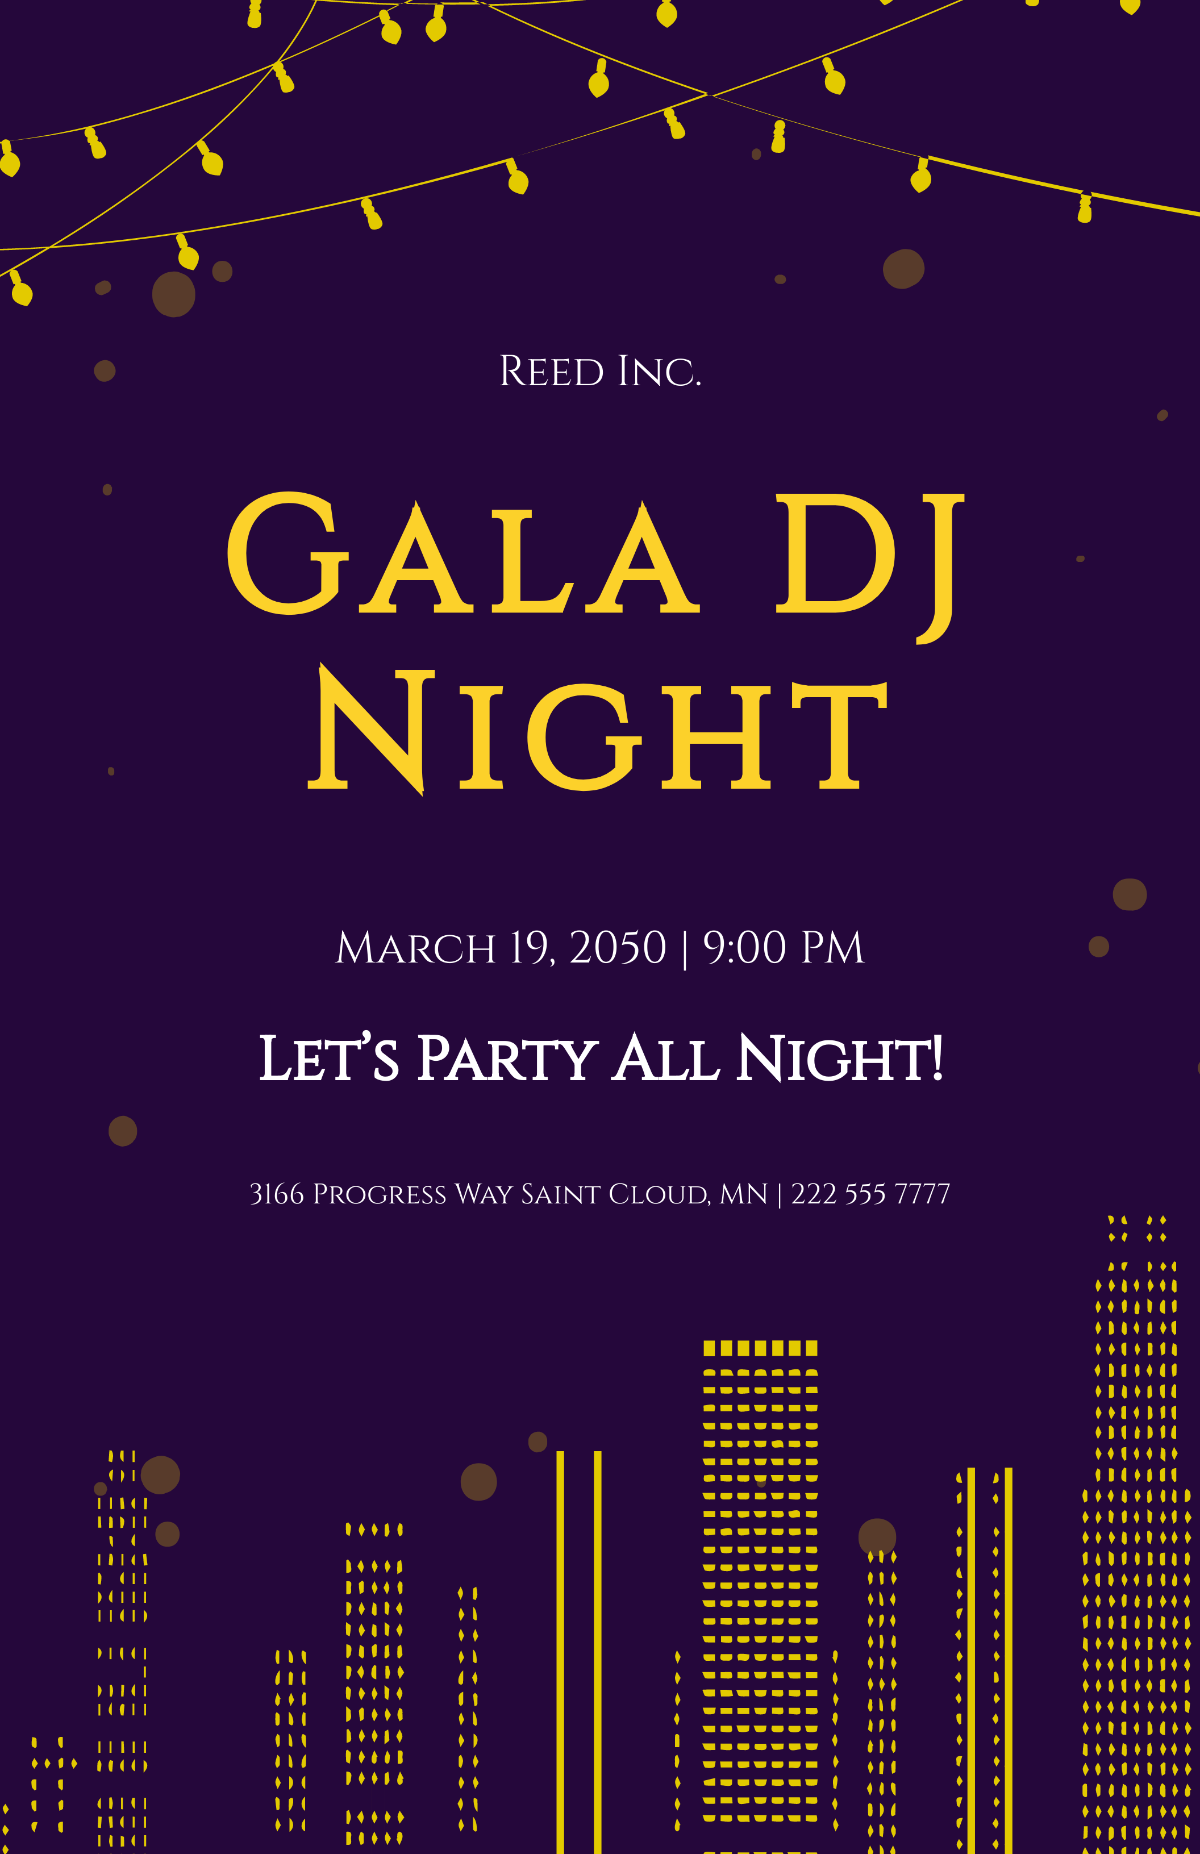 Free Gala Dj Night Poster Template